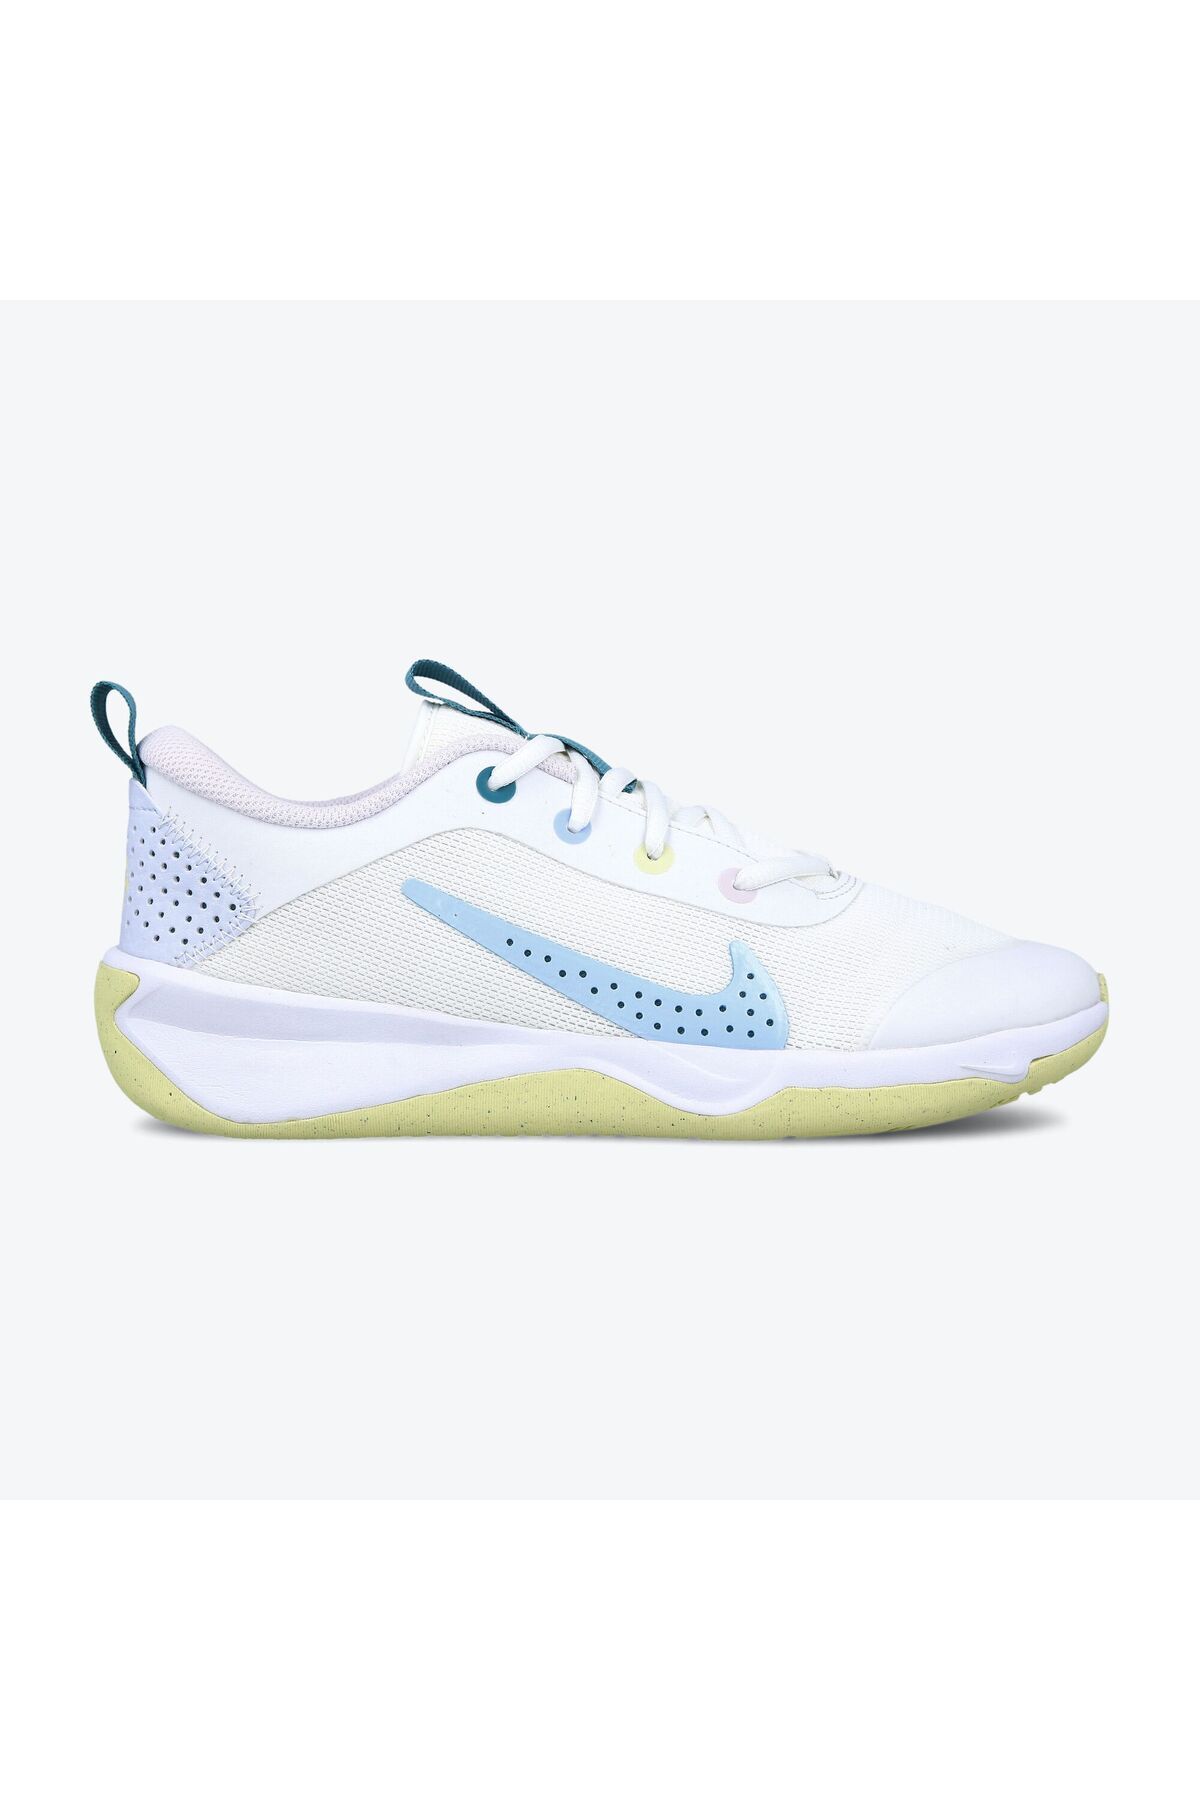 Nike Omni Multi-Court Older Kids' Indoor Court Shoes - White